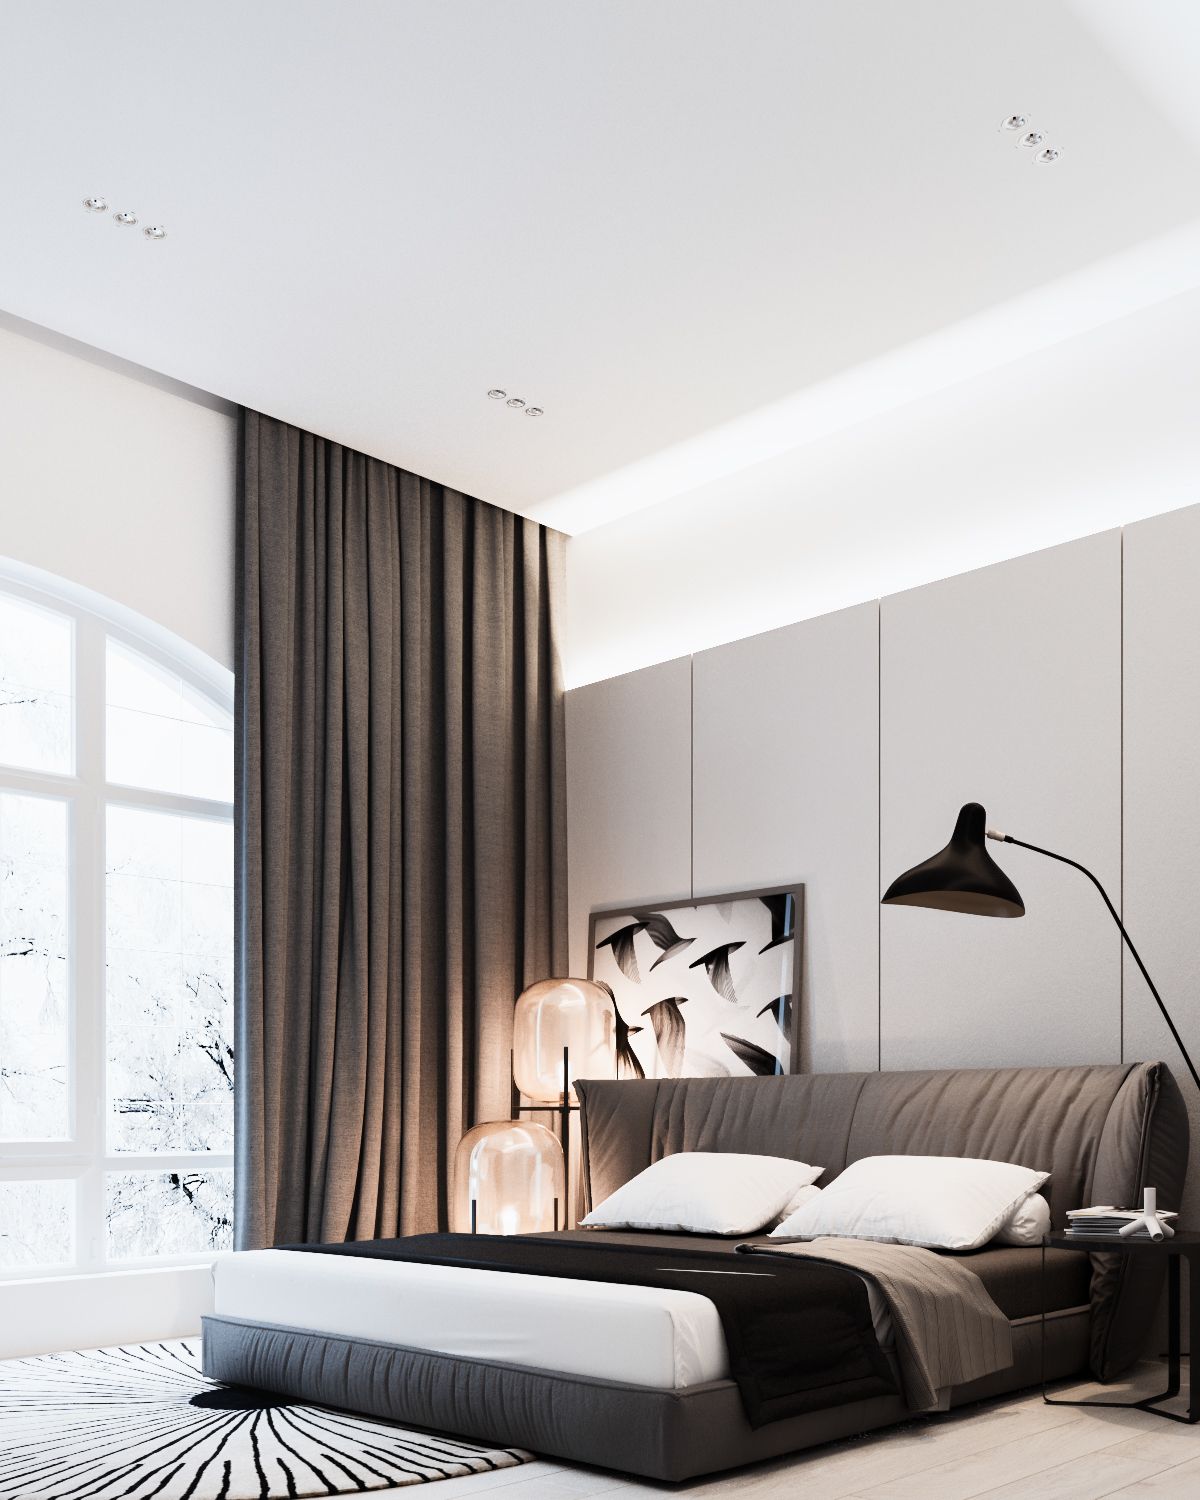 Modern bedroom interior style "width =" 1200 "height =" 1500 "srcset =" https://mileray.com/wp-content/uploads/2020/05/1588510798_760_2-Modern-Interior-Style-For-Stylish-Bedroom-Design.jpg 1200w, https : //mileray.com/wp-content/uploads/2016/06/sophisticated-greyscale-bedroom-design-1-240x300.jpg 240w, https://mileray.com/wp-content/uploads/2016/06/ sophisticated-grayscale-bedroom-design-1-768x960.jpg 768w, https://mileray.com/wp-content/uploads/2016/06/sophisticated-greyscale-bedroom-design-1-819x1024.jpg 819w, https: //mileray.com/wp-content/uploads/2016/06/sophisticated-greyscale-bedroom-design-1-696x870.jpg 696w, https://mileray.com/wp-content/uploads/2016/06/sophisticated -greyscale-bedroom-design-1-1068x1335.jpg 1068w, https://mileray.com/wp-content/uploads/2016/06/sophisticated-greyscale-bedroom-design-1-336x420.jpg 336w "sizes =" (maximum width: 1200px) 100vw, 1200px